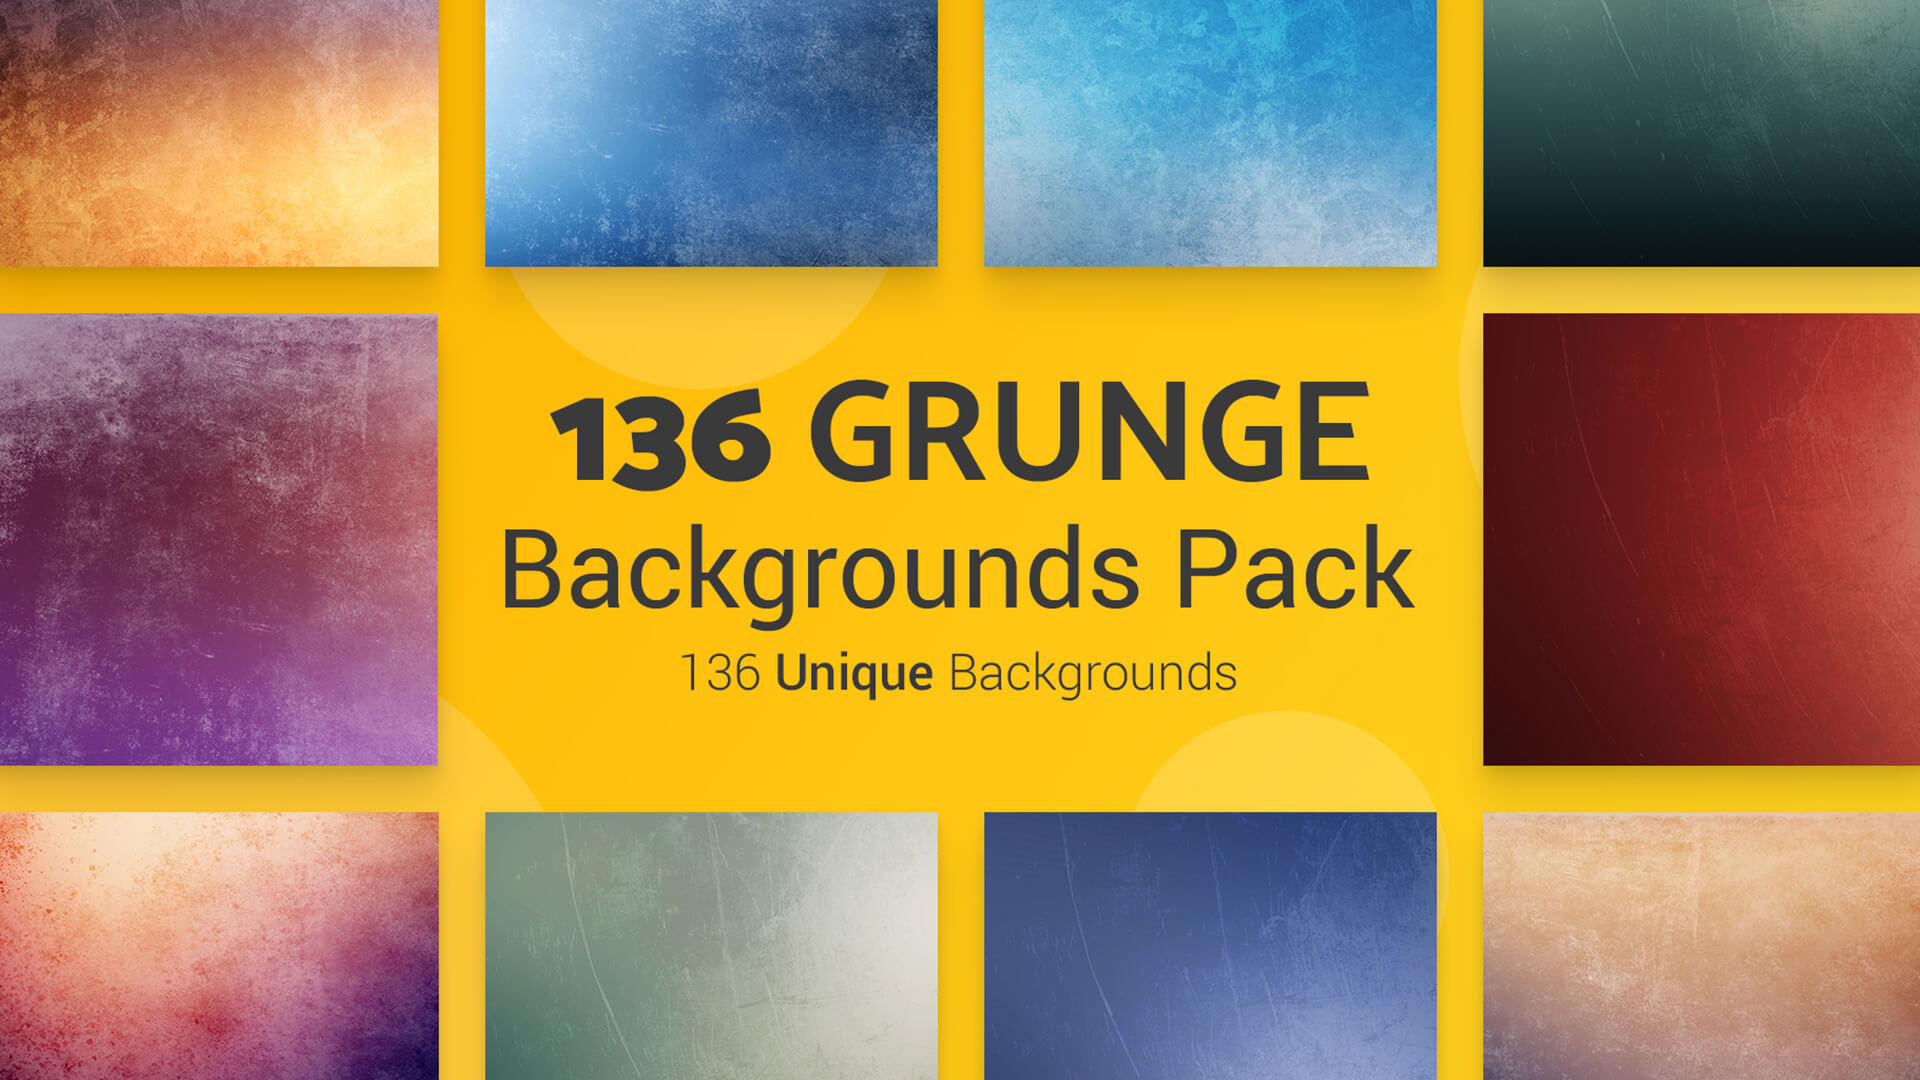 The Big Graphic Design Resources Bundle - 136 Grunge BGs Pack